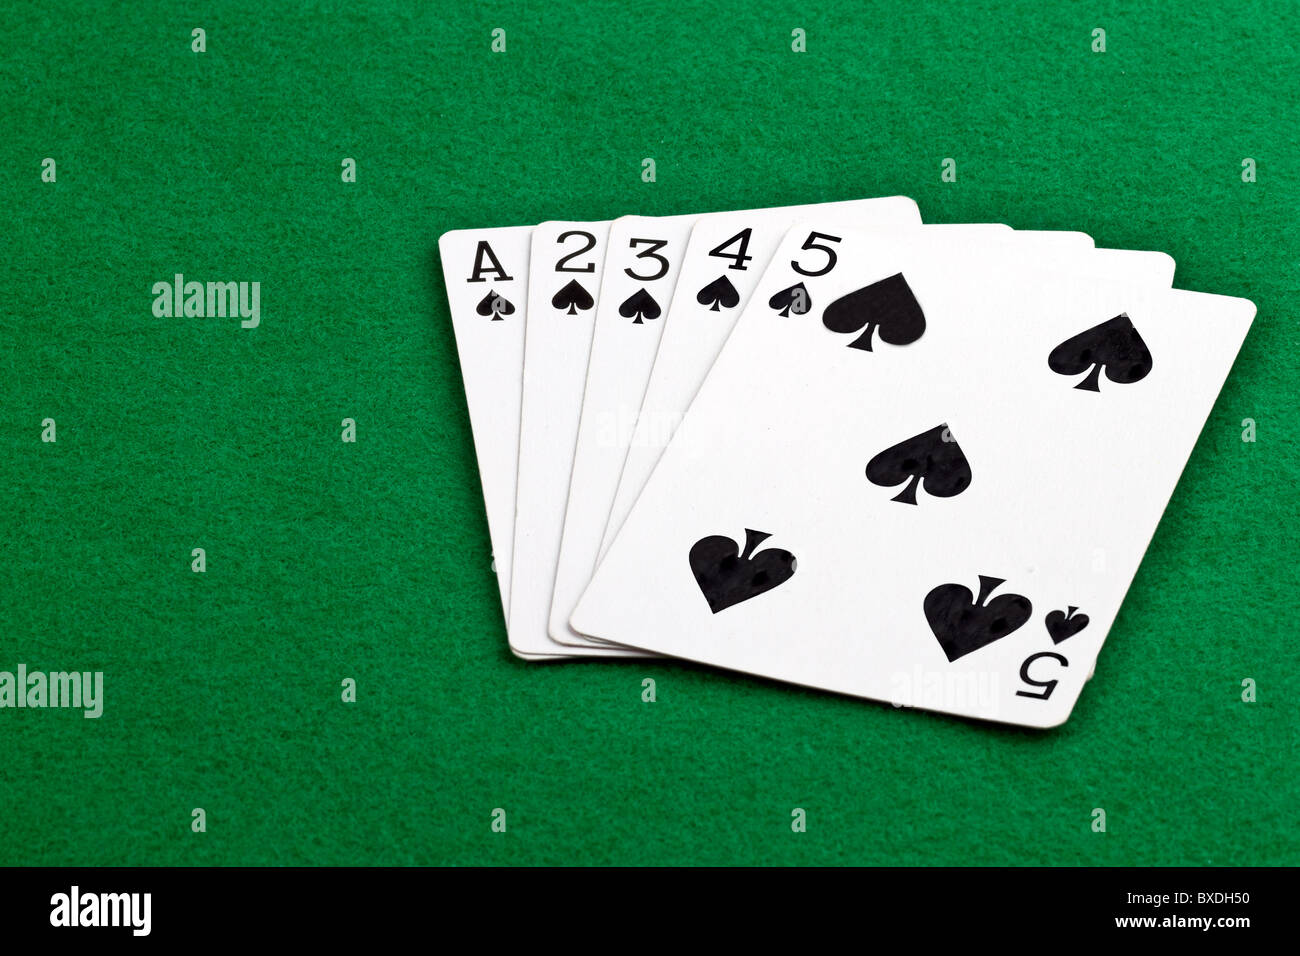 Poker-Blatt mit einem Ostwind-Flush Pik auf grünem Filz Stockfoto